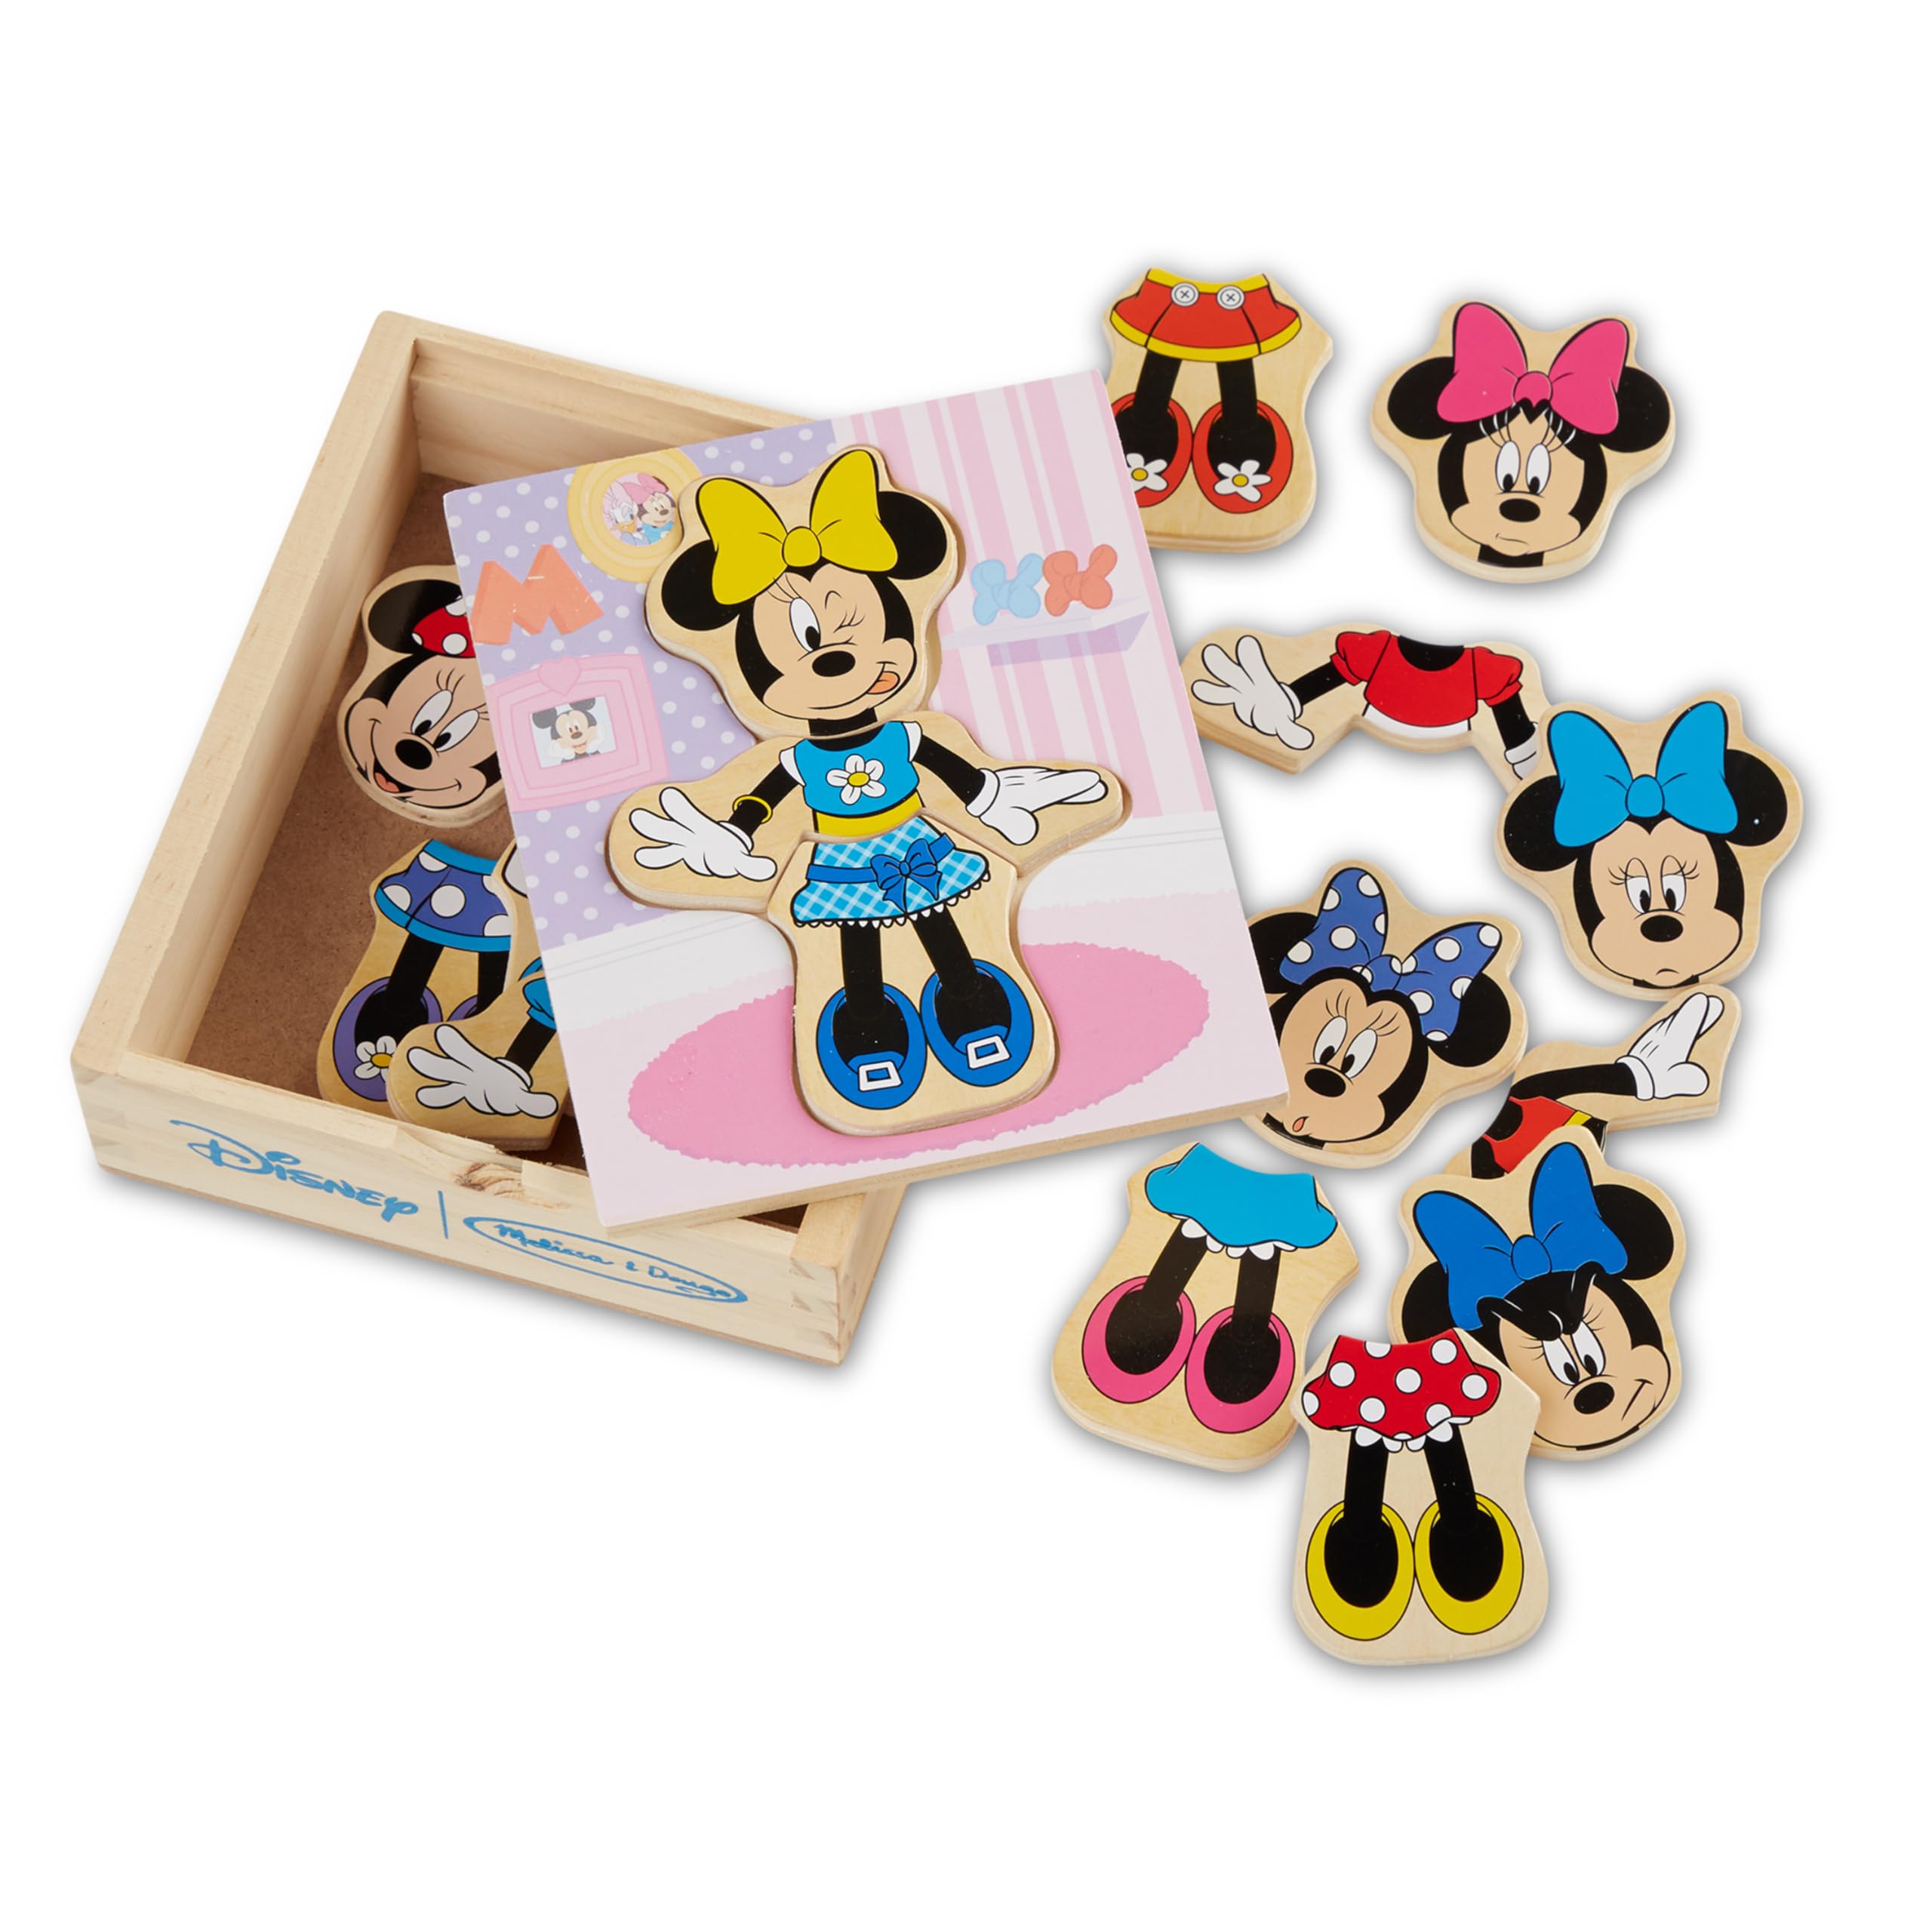 Melissa & Doug Disney Minnie Mouse Mix and Match Dress-Up Wooden Play Set (18 pcs) - Minnie Mouse Toys For Disney Fans, Fashion